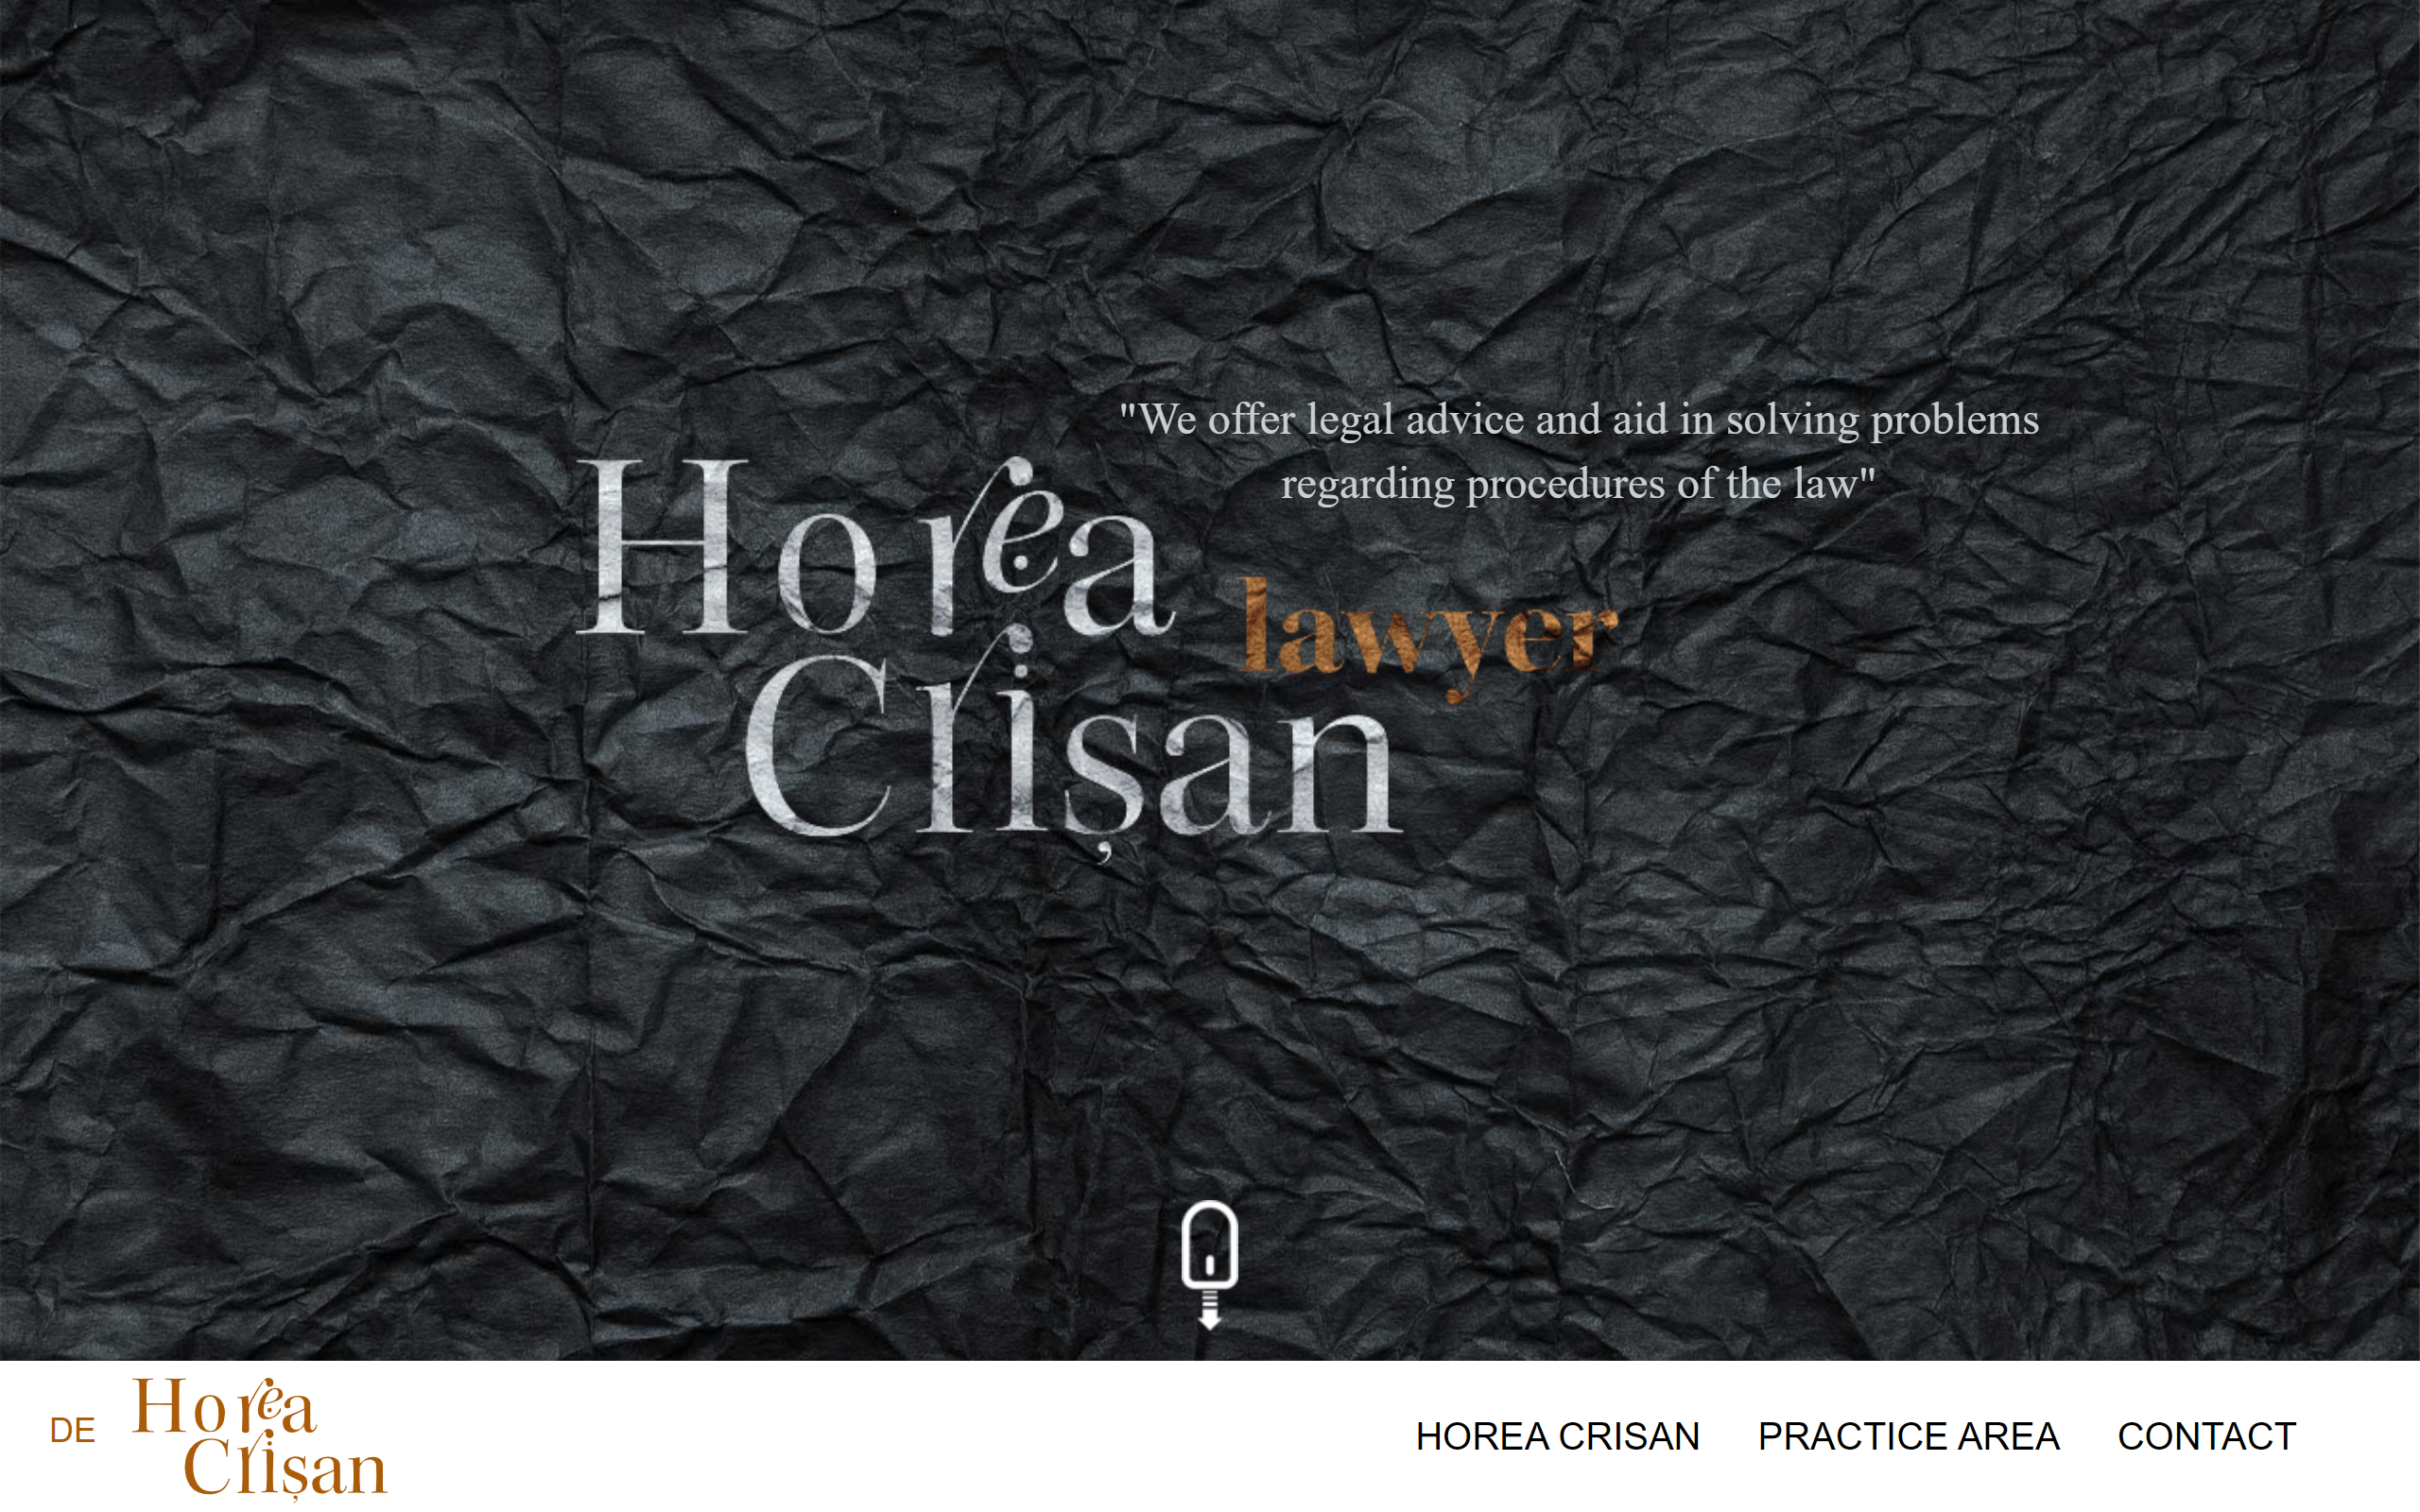 Horea Crisan law firm websites